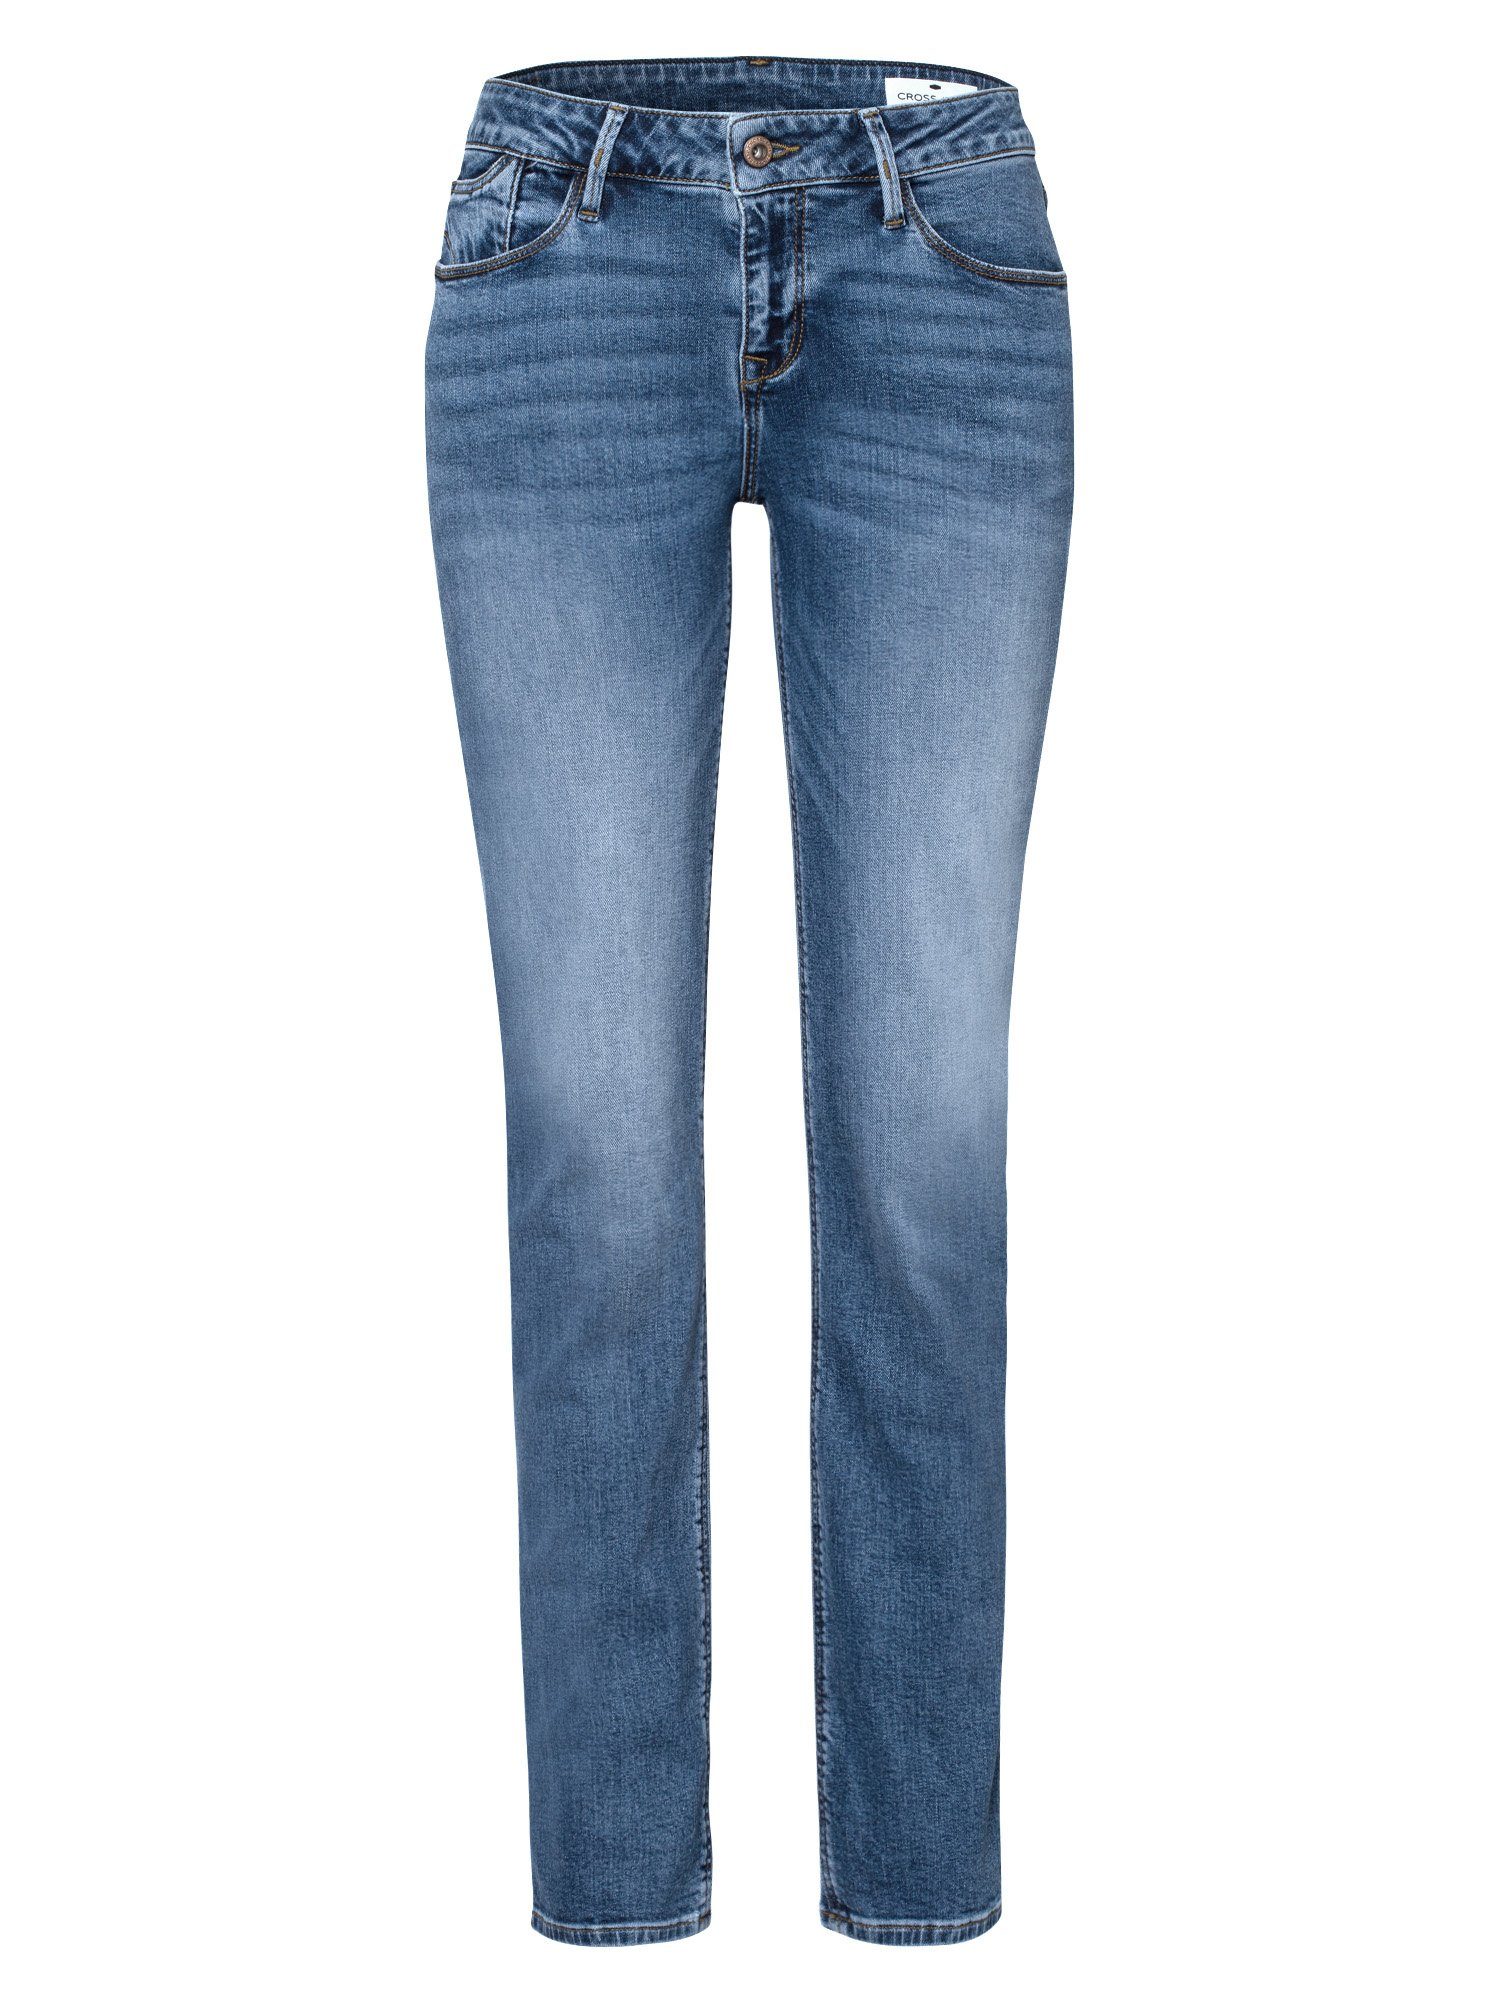 Cross Jeans Jeans online kaufen | OTTO